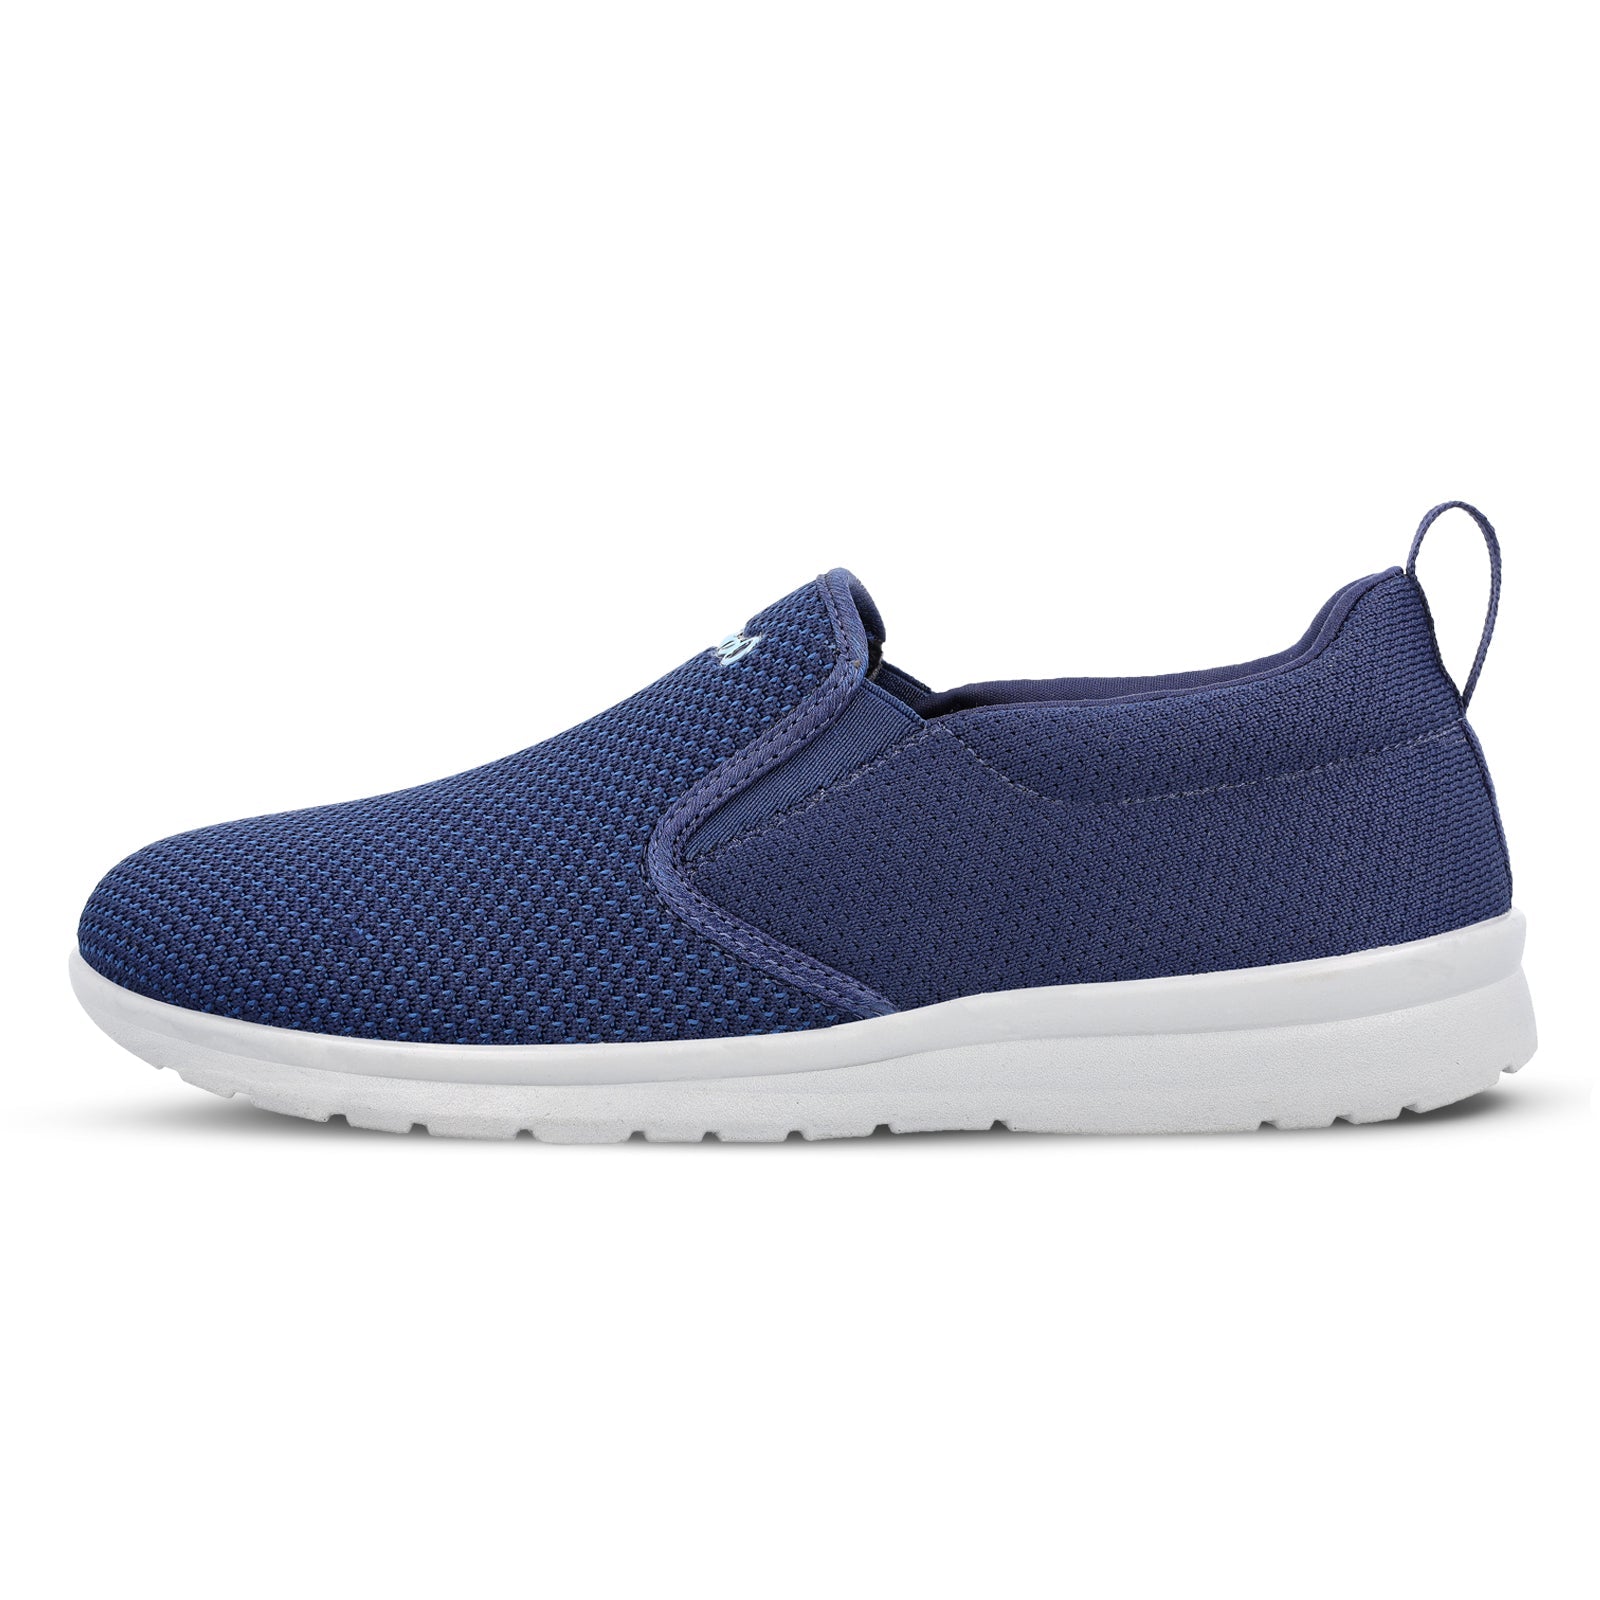 Walkaroo Belly Shoes for Men - GY3456 Navy Blue – Walkaroo Footwear